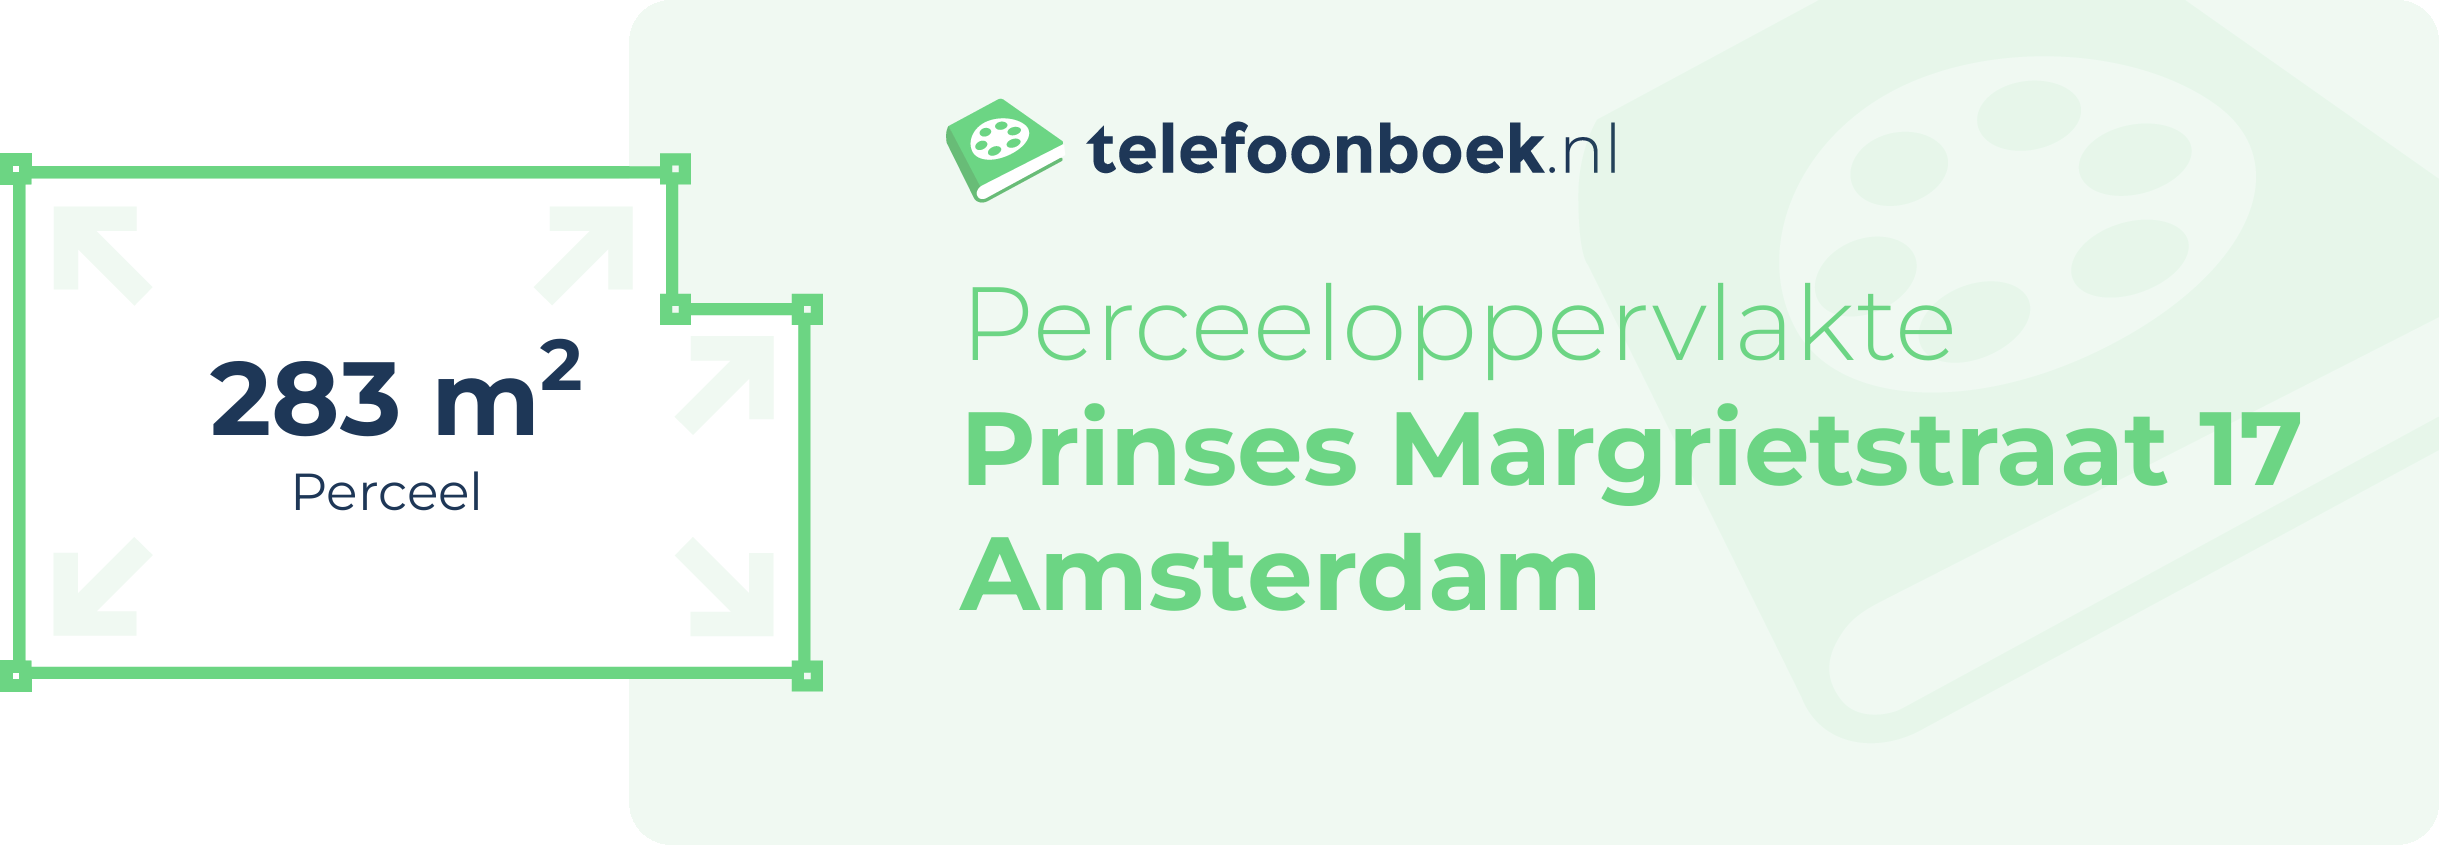 Perceeloppervlakte Prinses Margrietstraat 17 Amsterdam